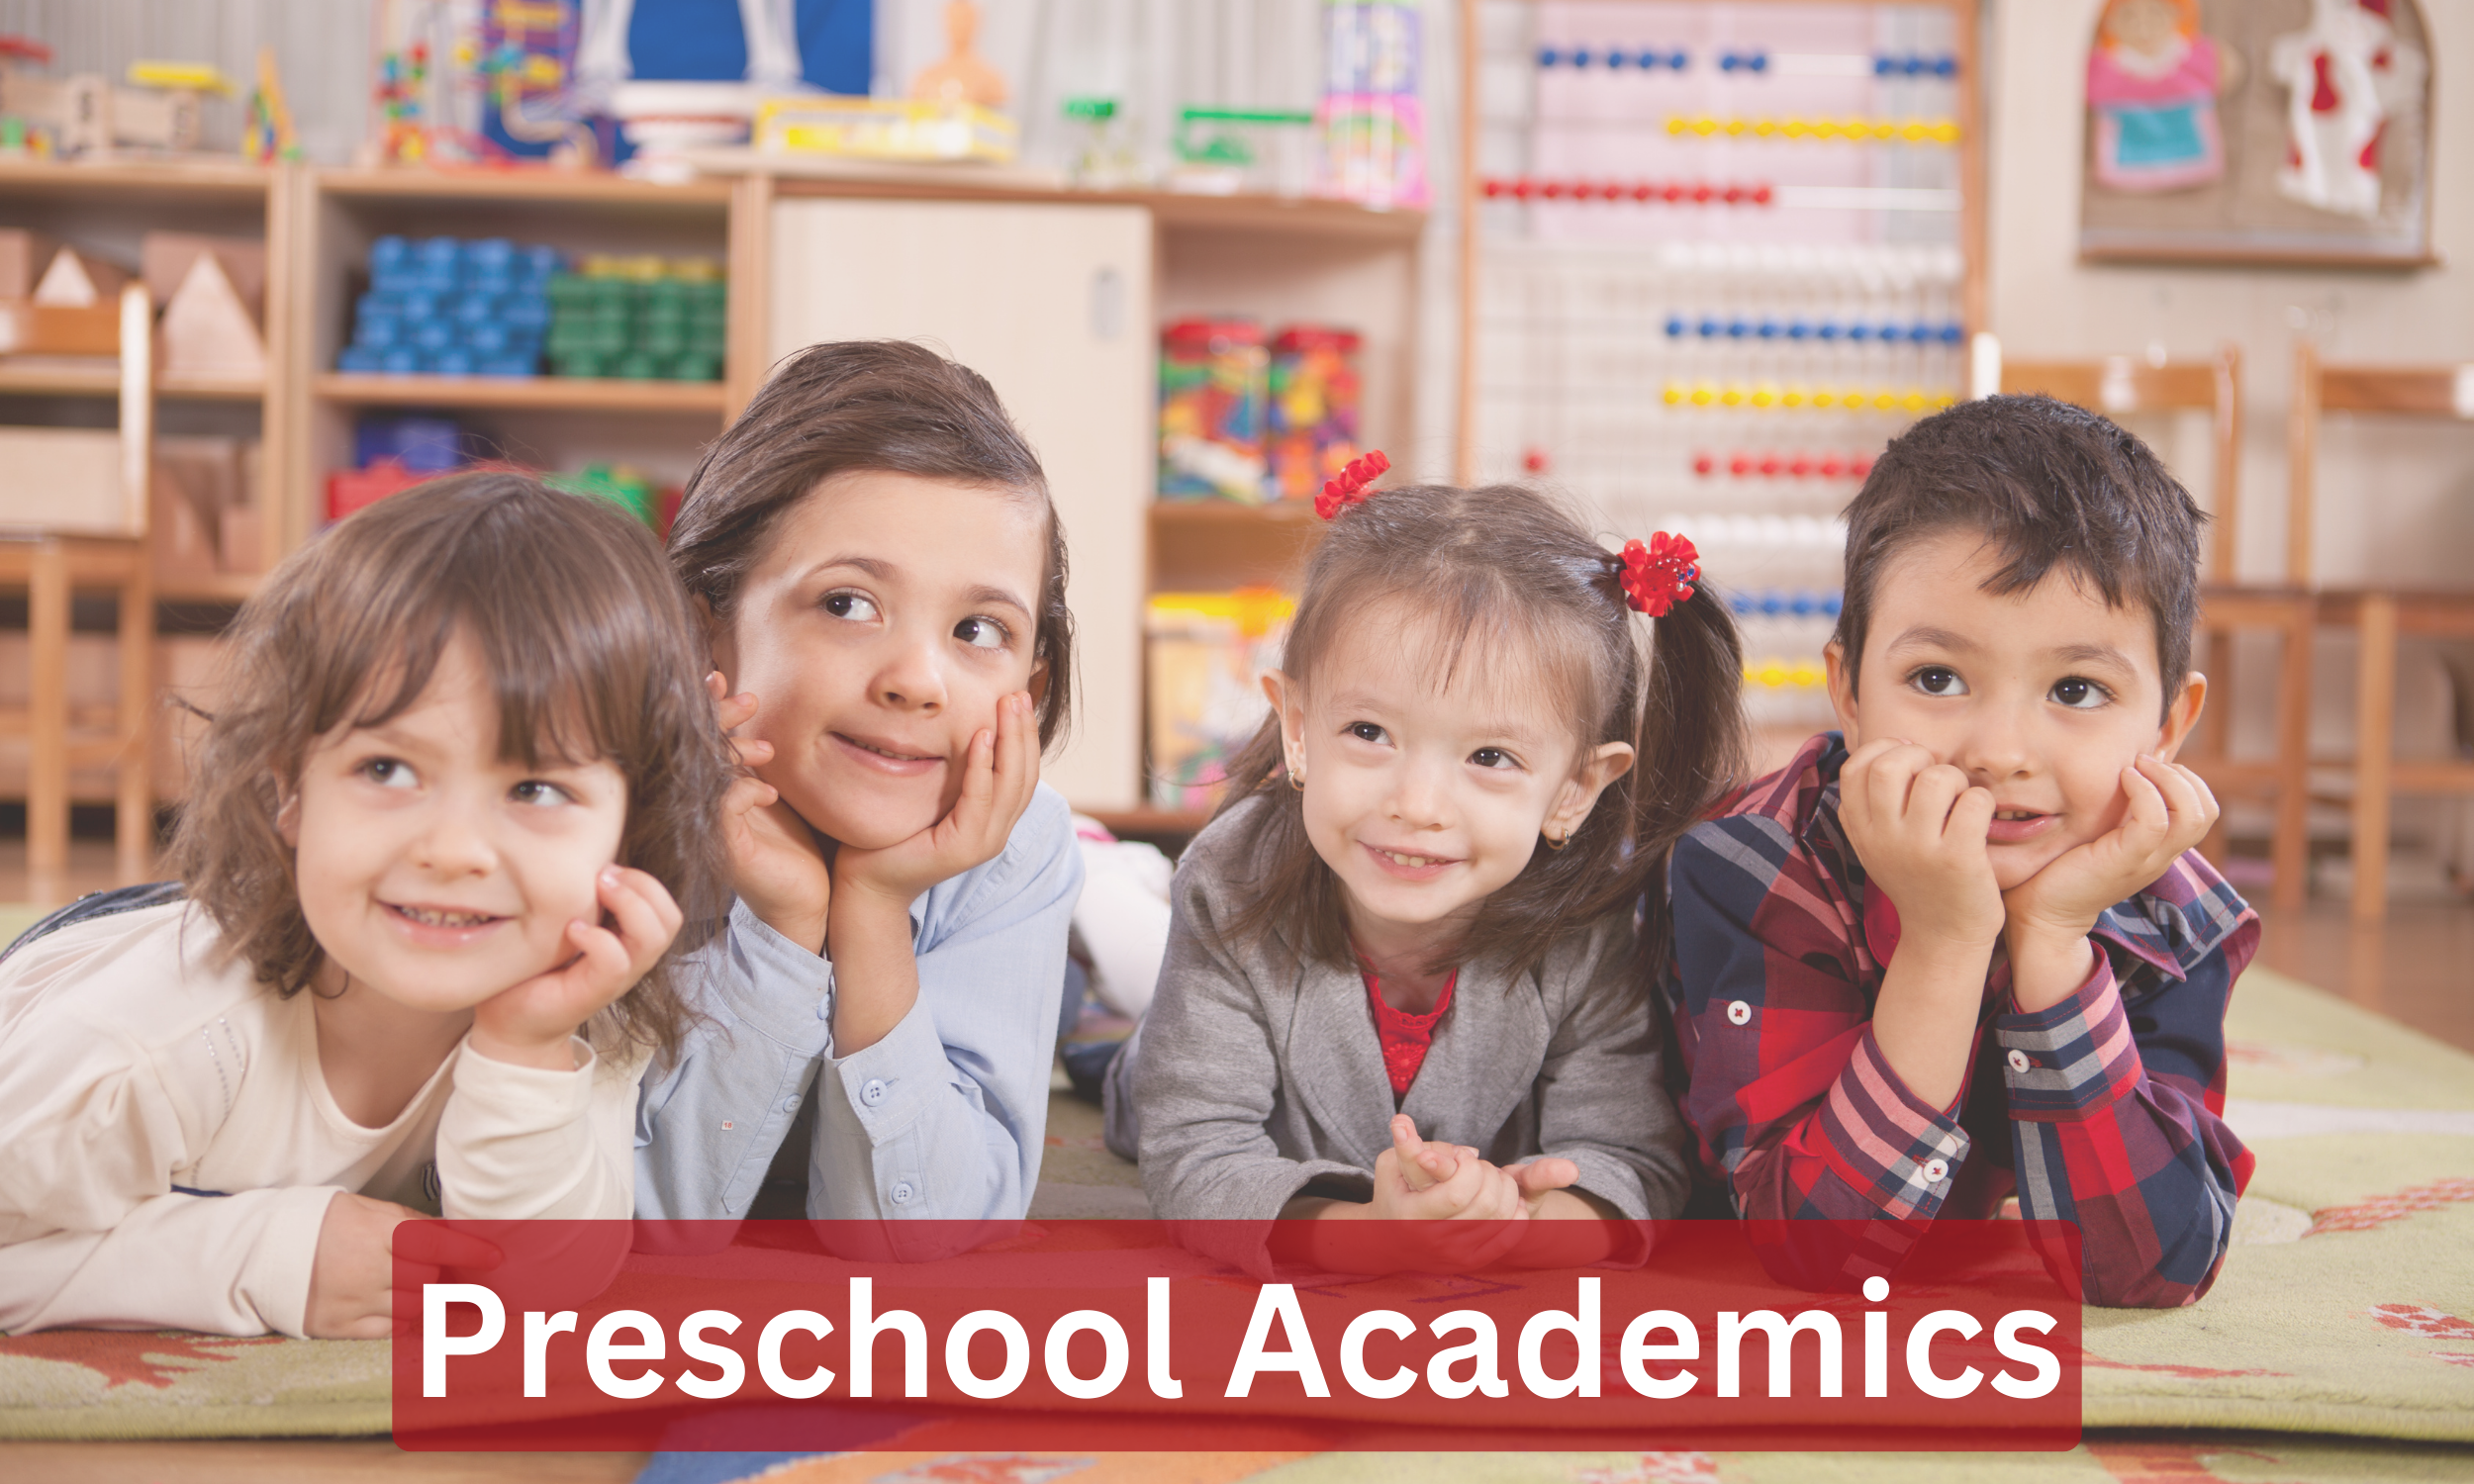 preschool-academics-2500-x-1500-px-2